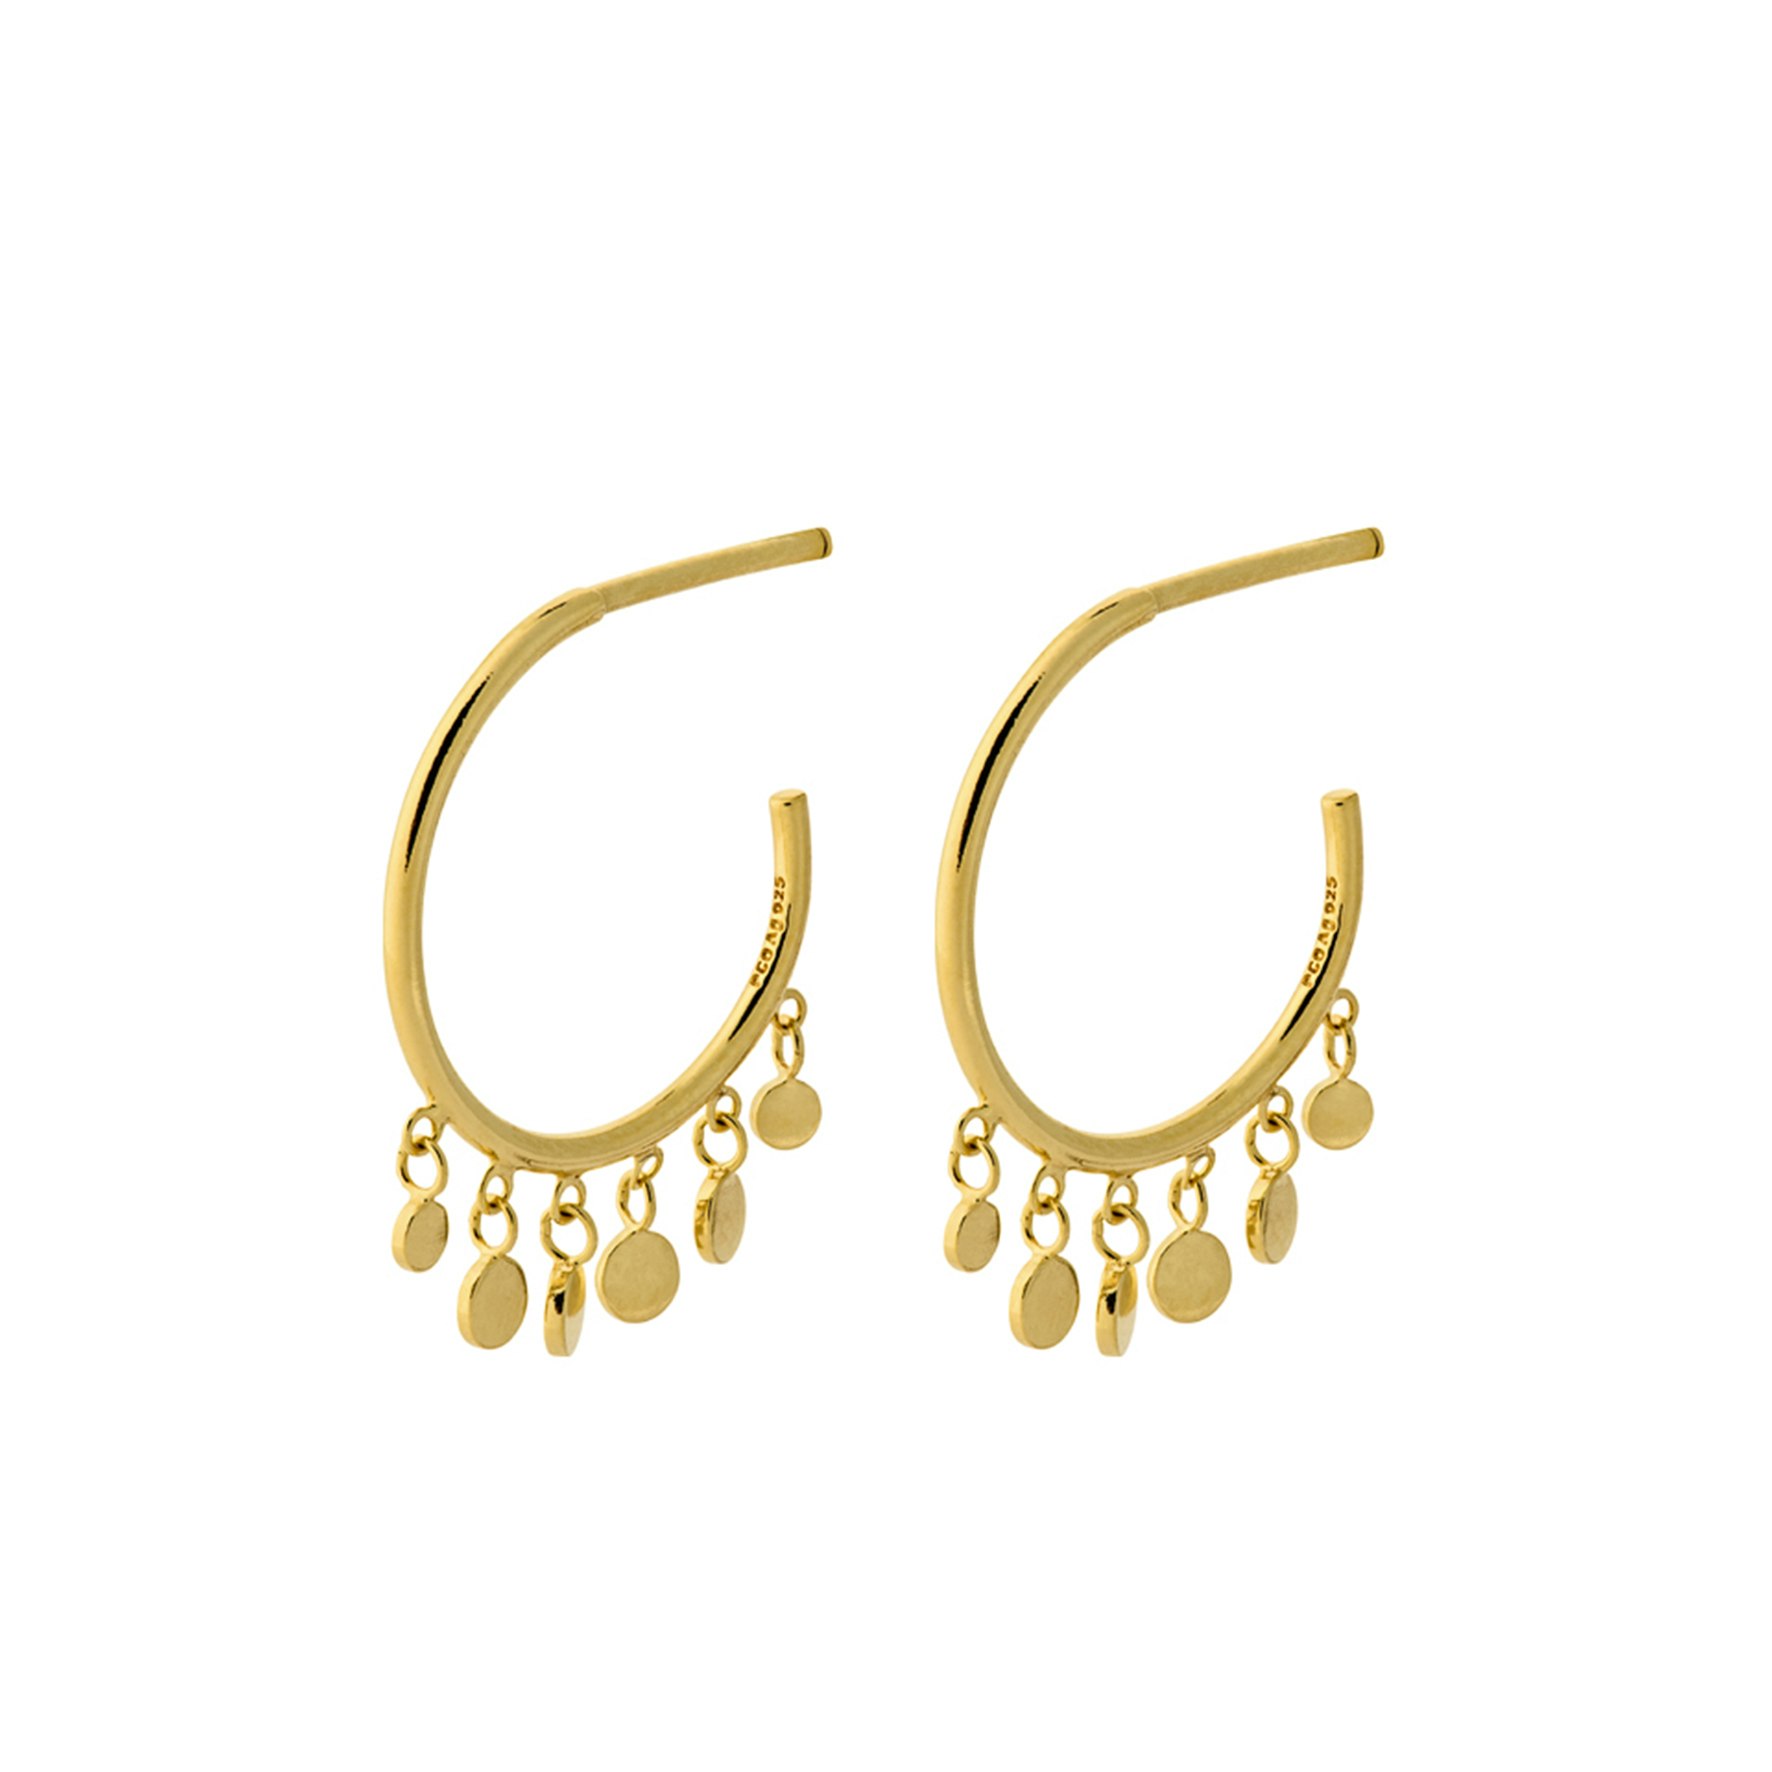 Glow Earrings from Pernille Corydon in Goldplated-Silver Sterling 925